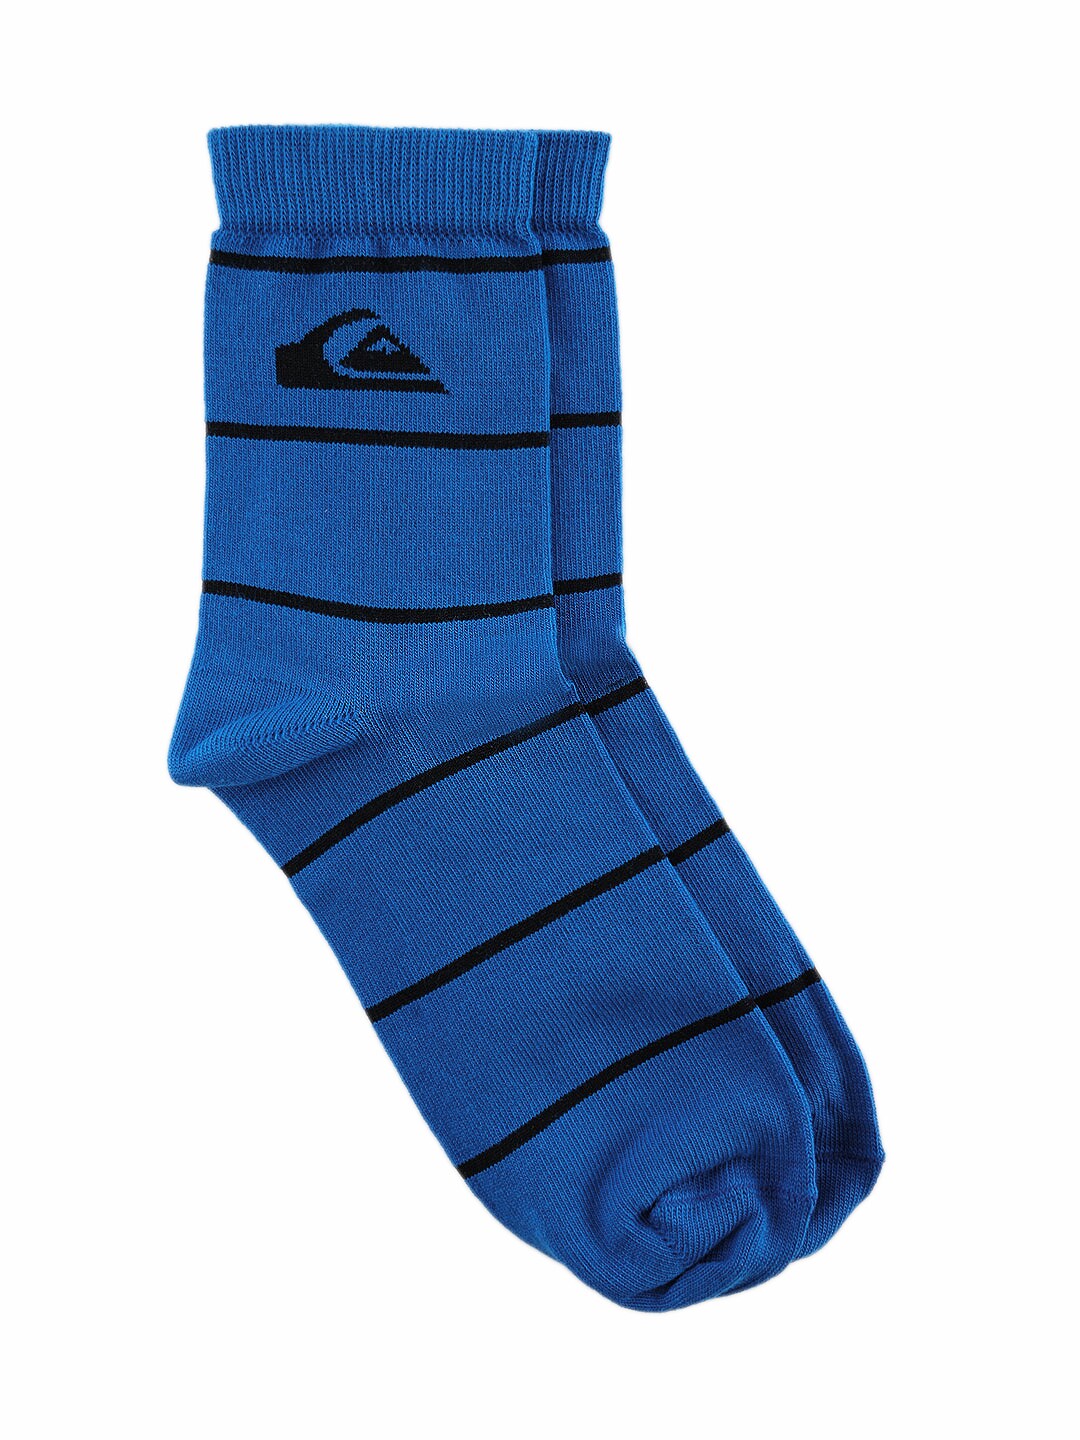 Quiksilver Men Blue Socks